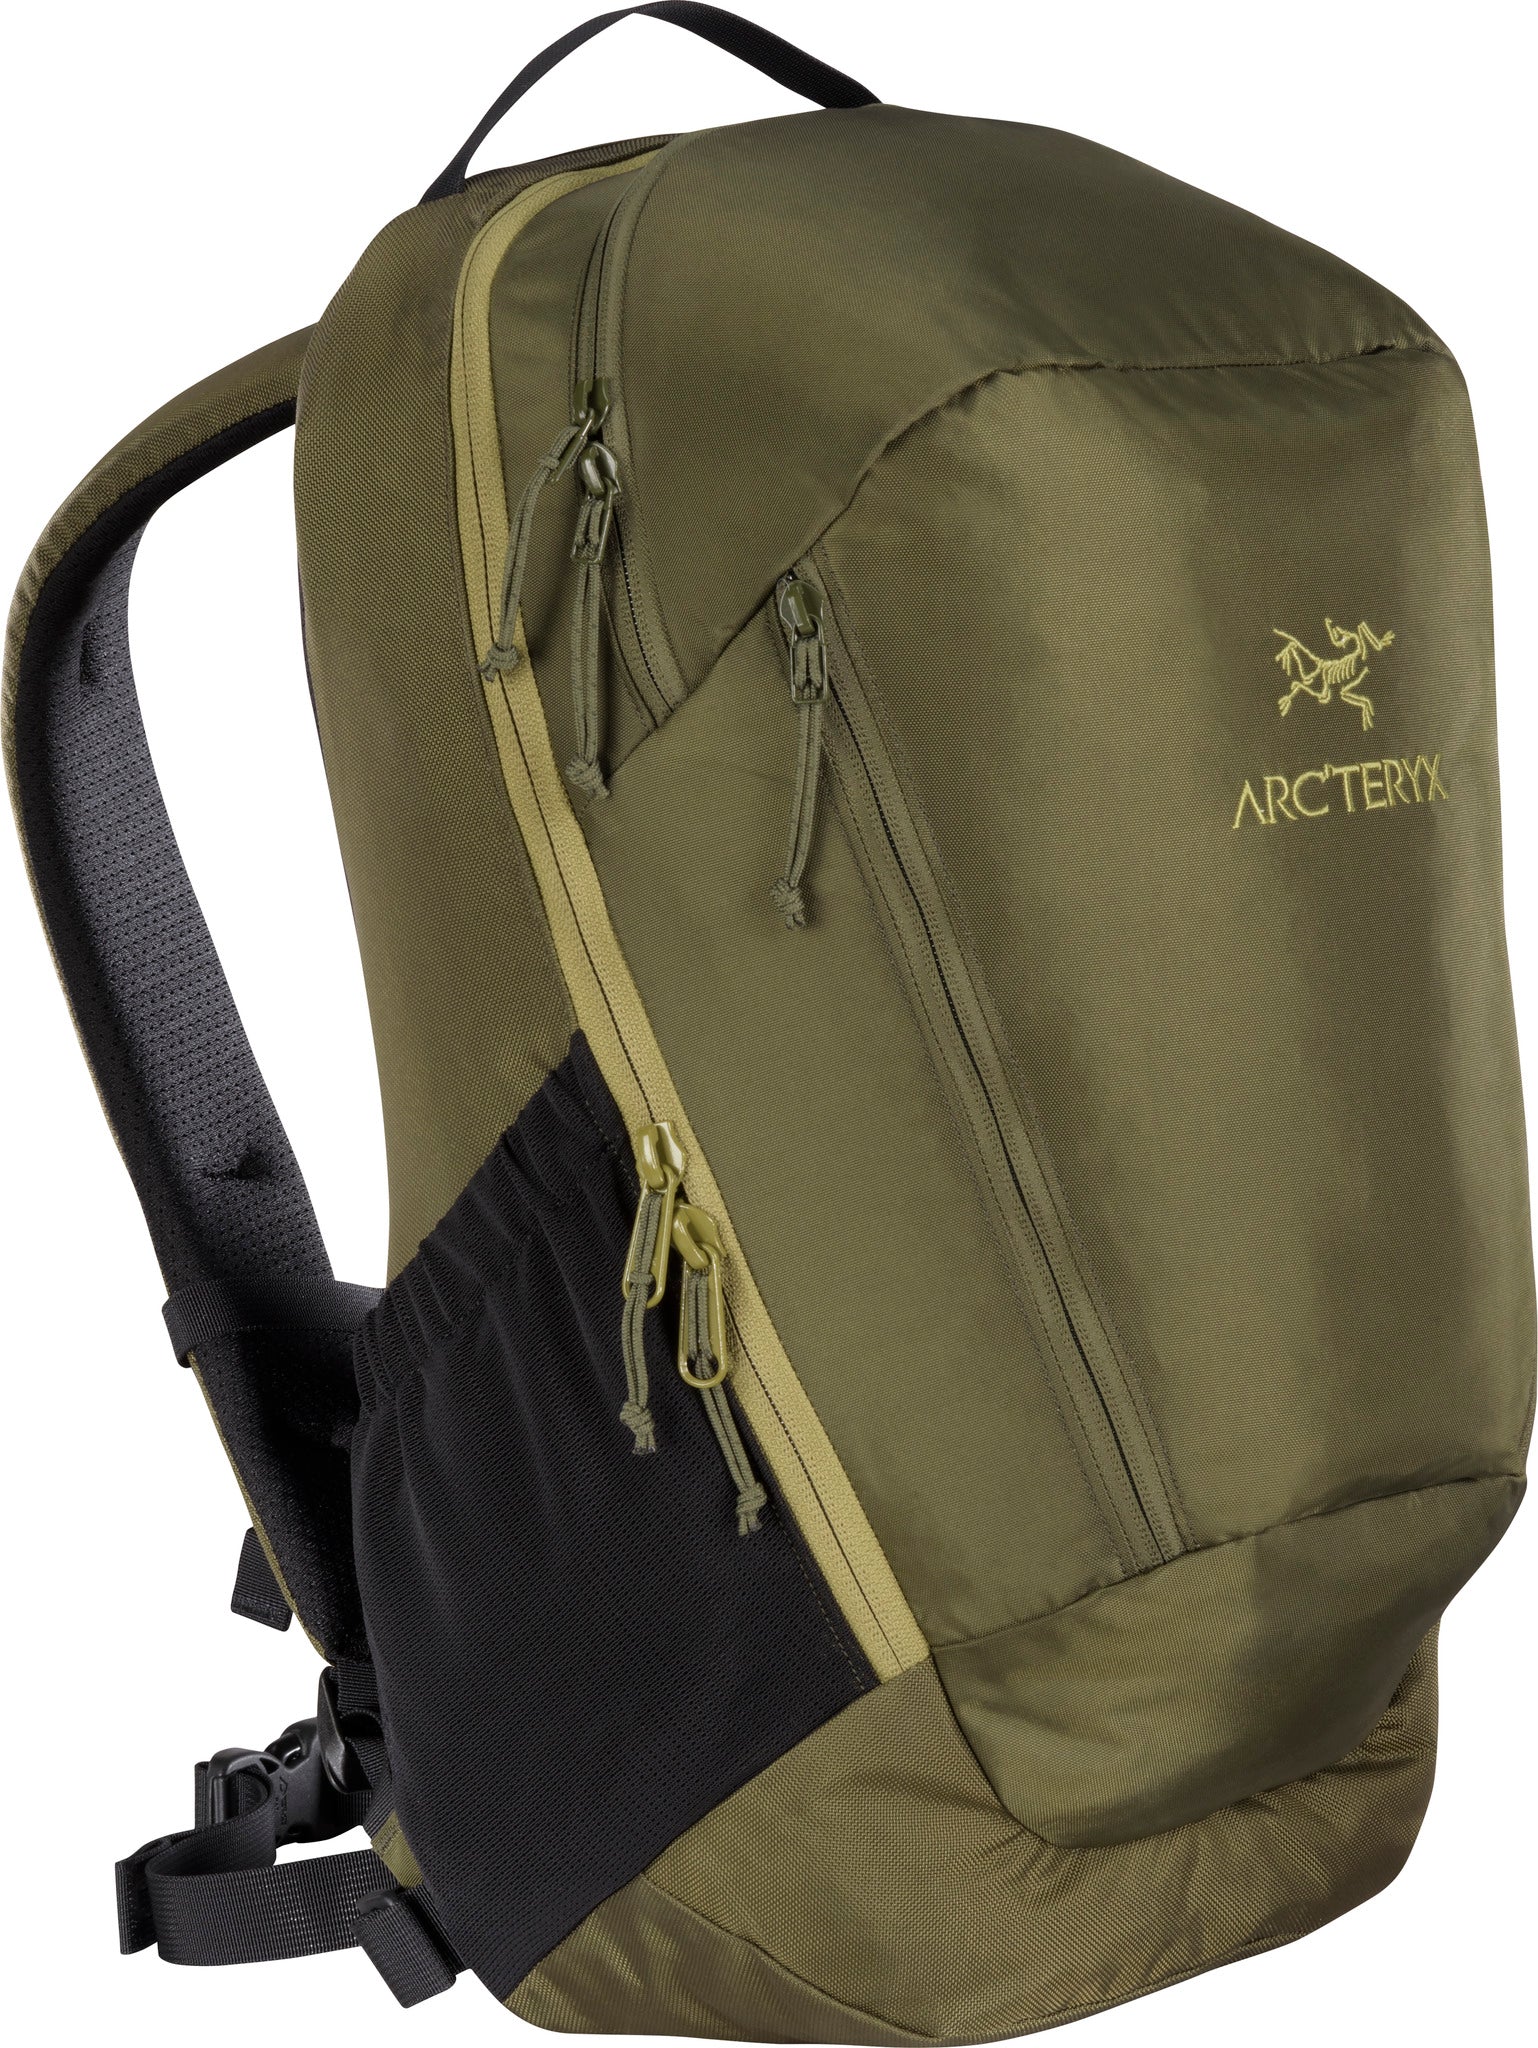 Arc'teryx Mantis 26 Backpack | Altitude Sports